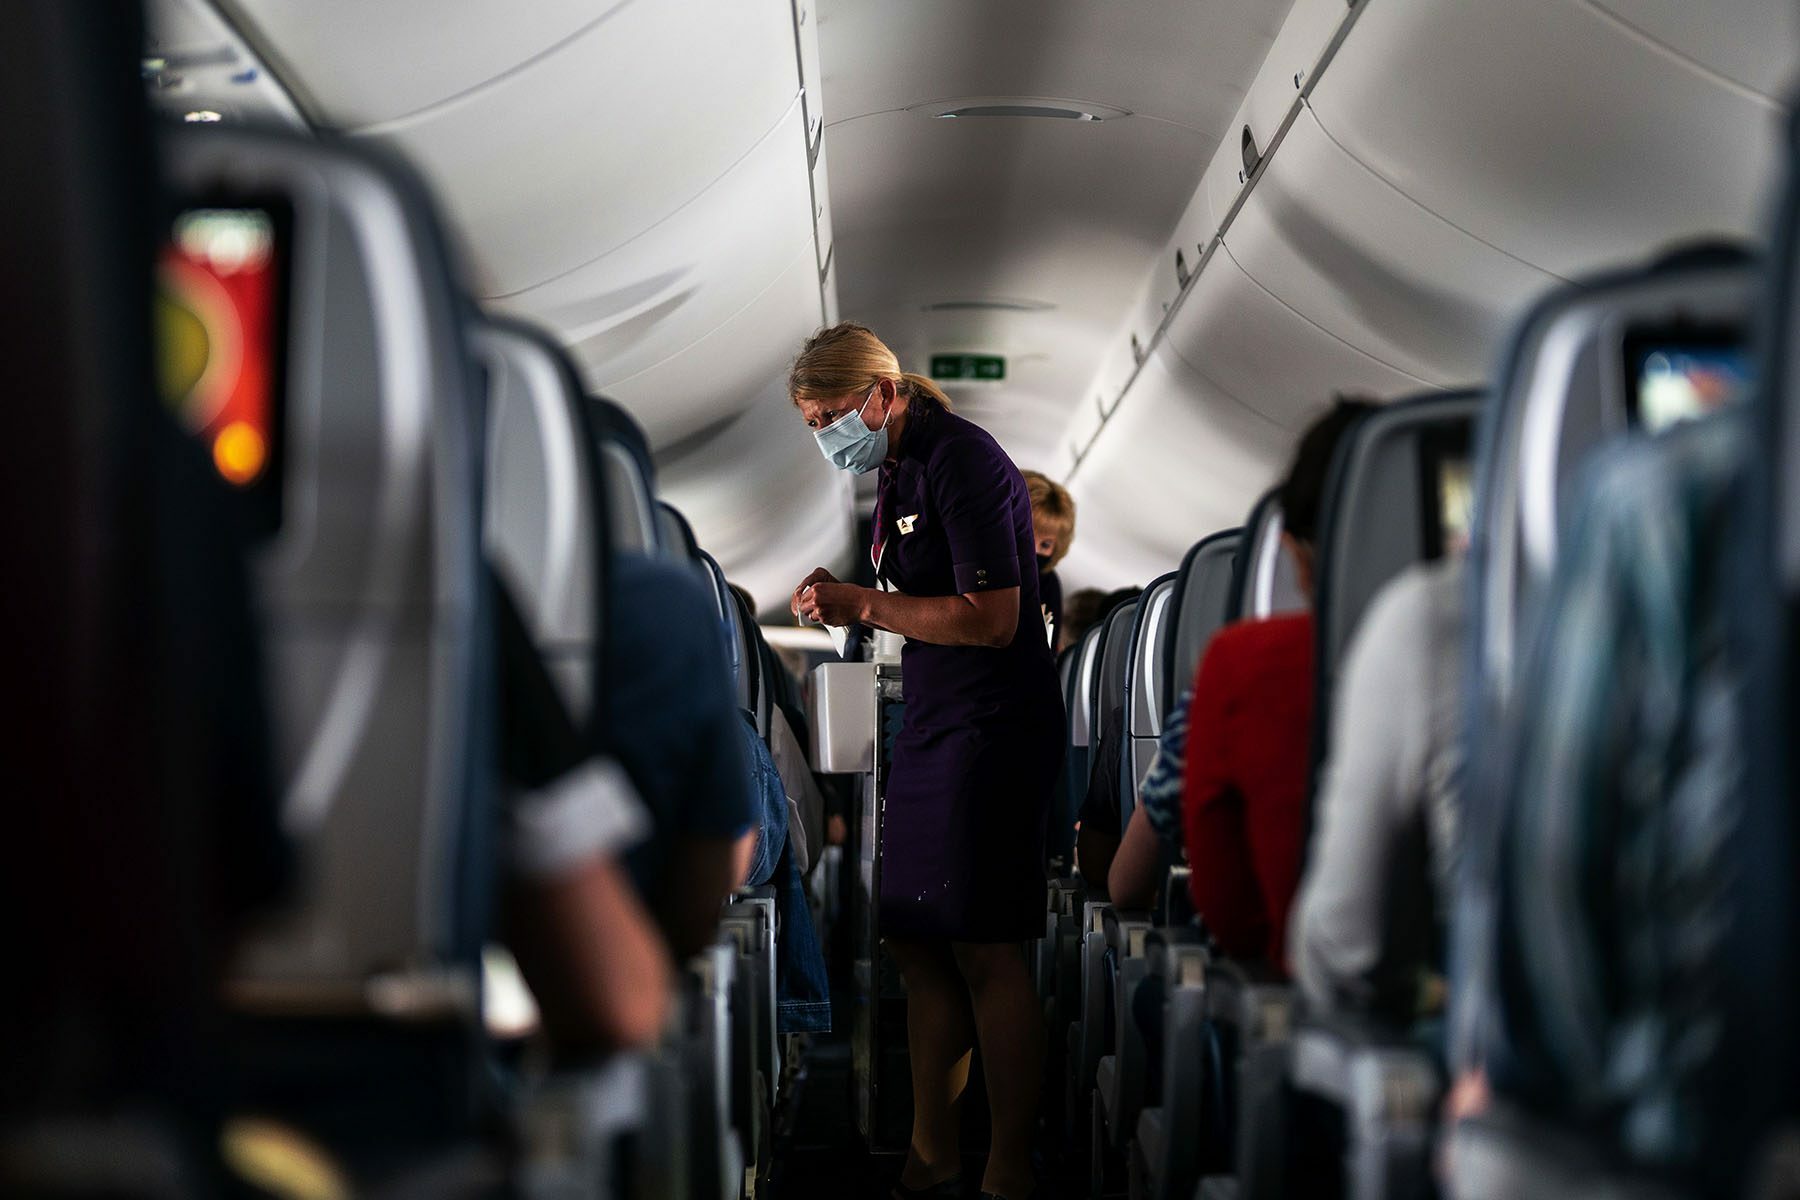 Flight attendants' jobs have become more dangerous